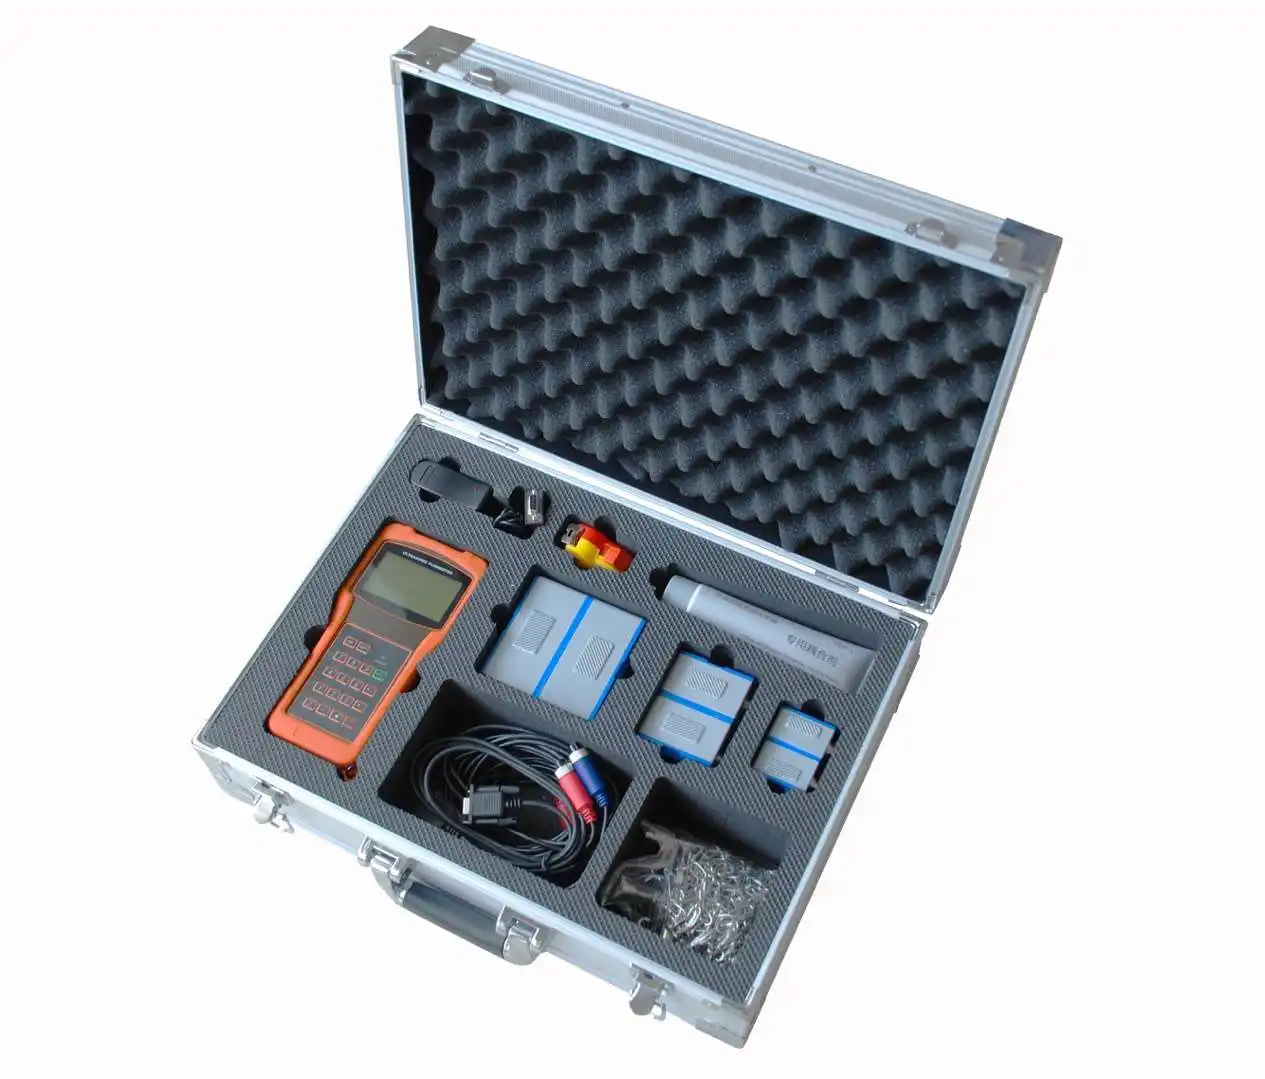 Handheld Ultrasonic Flow Meter Portable Flowmeter with Clamp on Sensor for Water